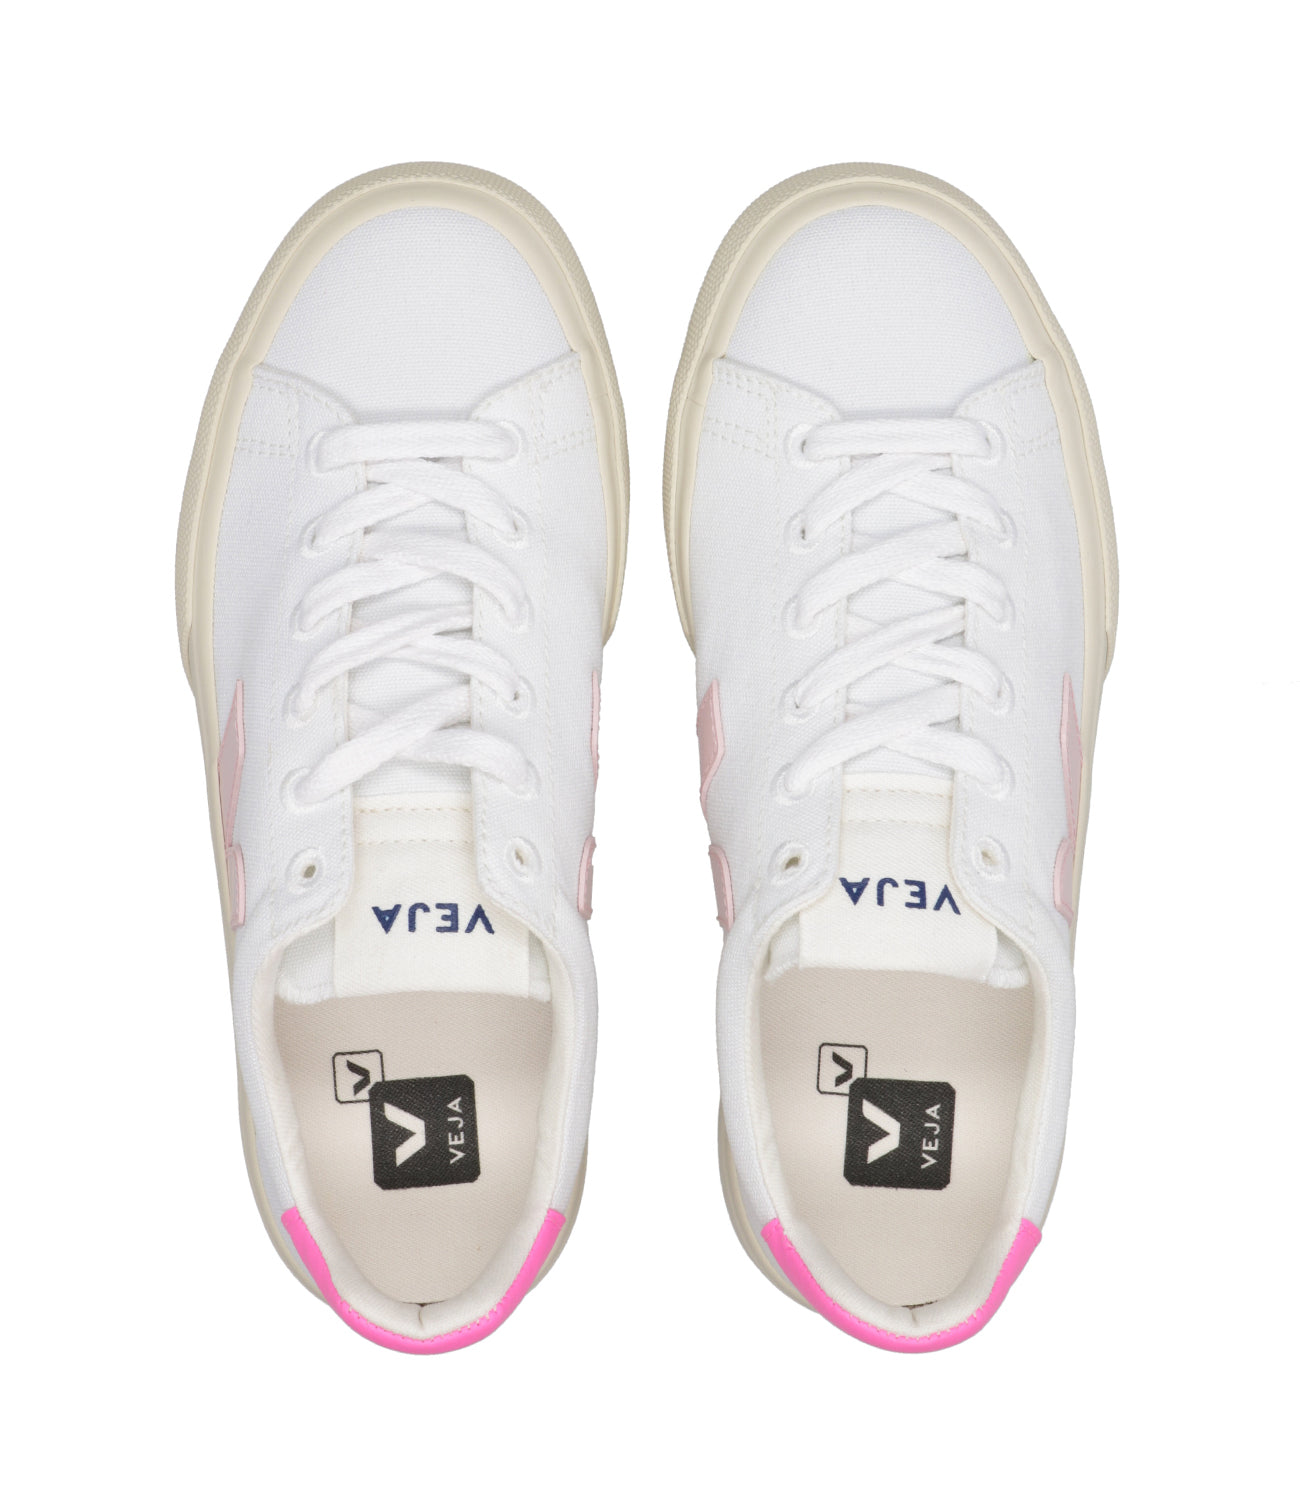 Veja | Sneakers Campo Canvas Bianco e Rosa